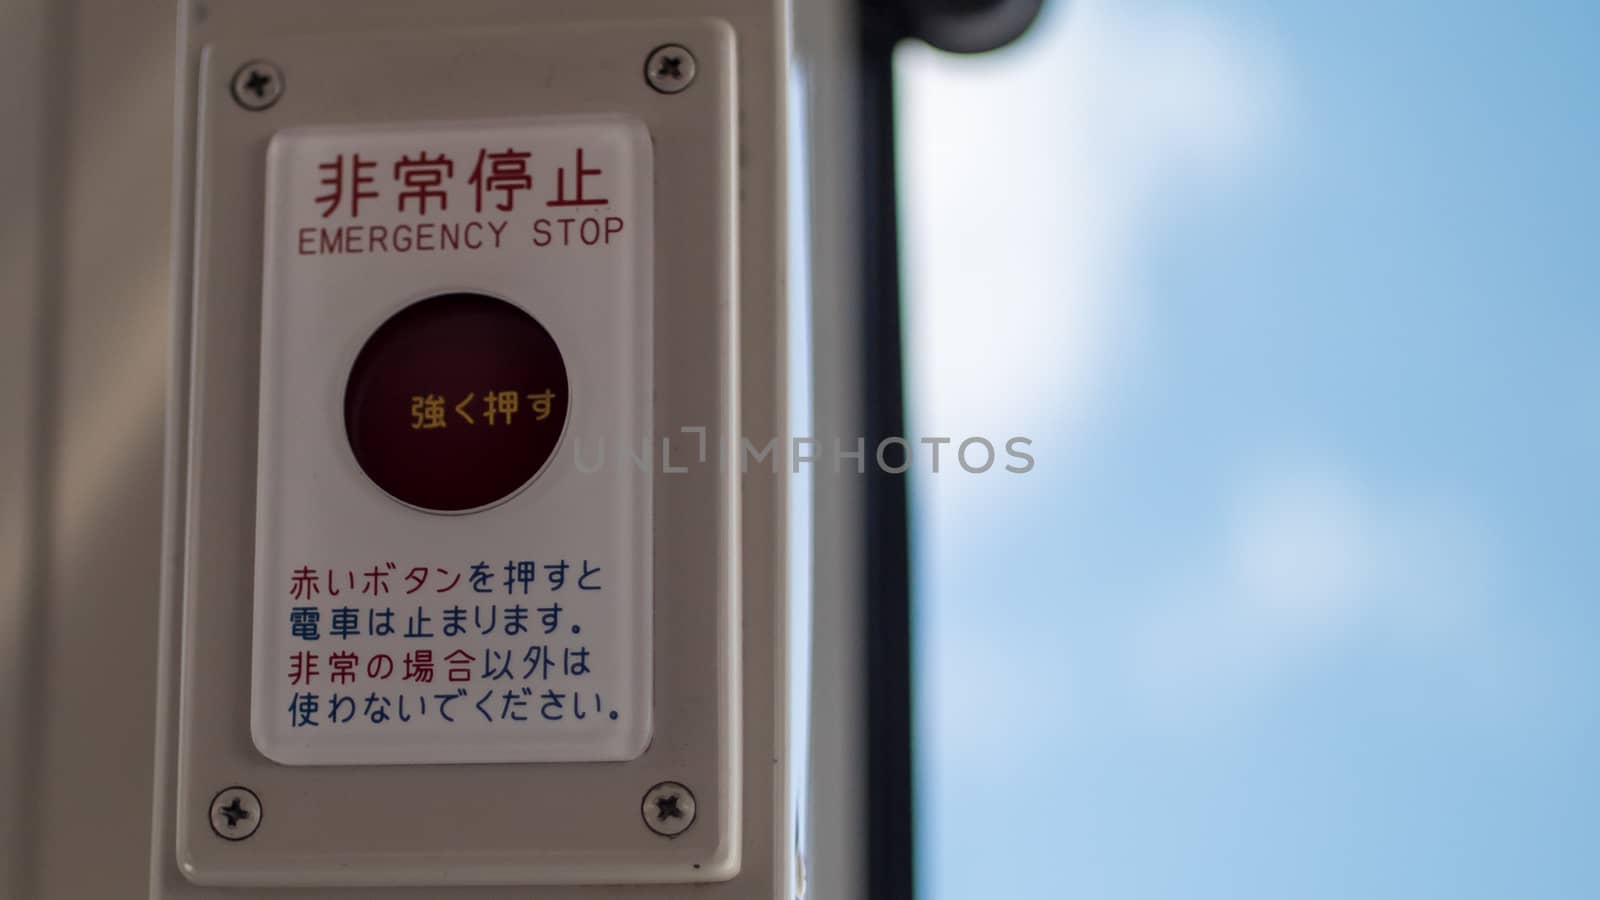 Japanese train Emergency stop button, Kansai, Japan, by ontheroadagain